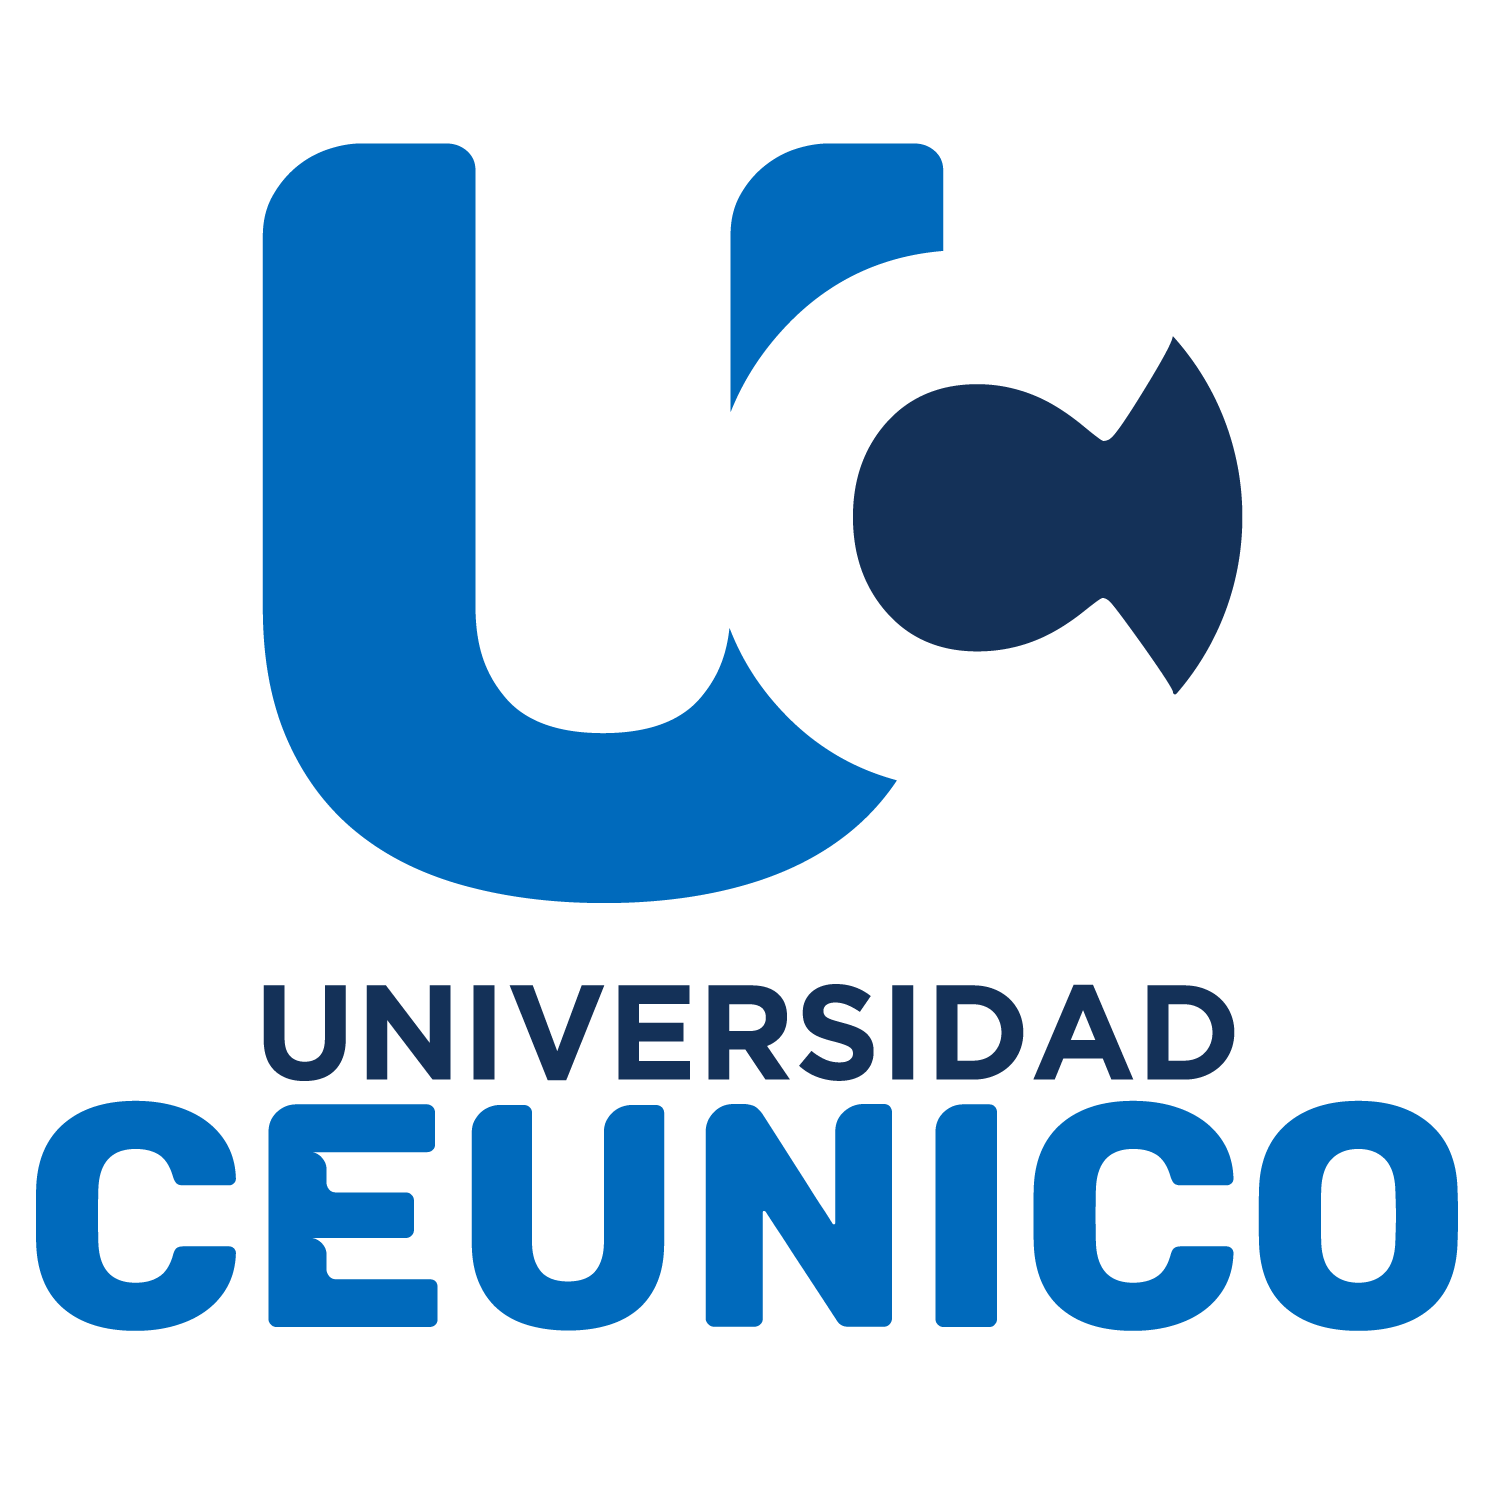 (c) Ceunico.edu.mx